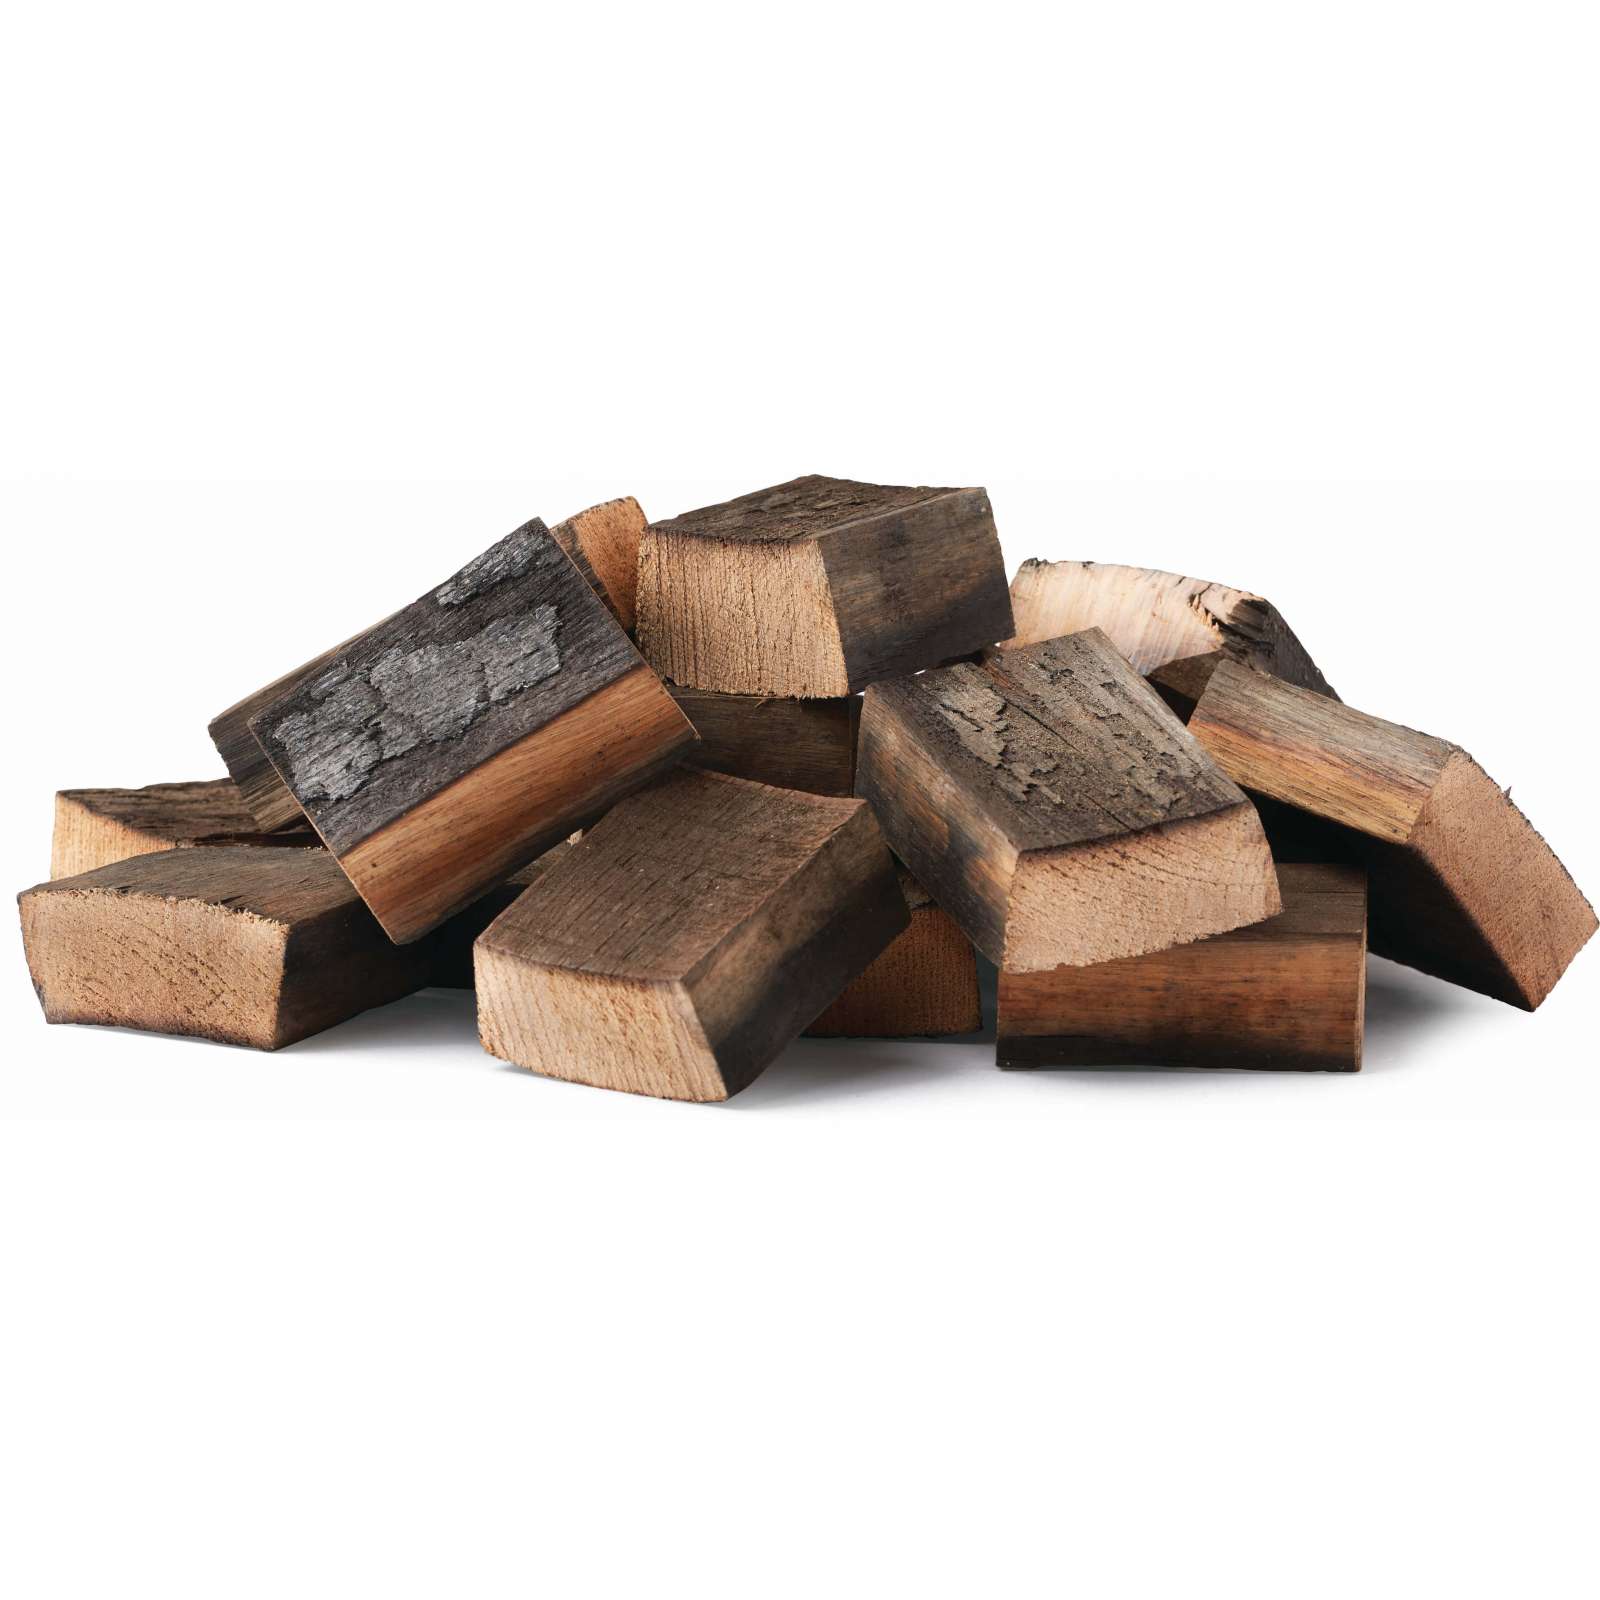 Napoleon Holz-Räucherchunks Brandy-Eiche Woodchunks 1,5 kg 67025